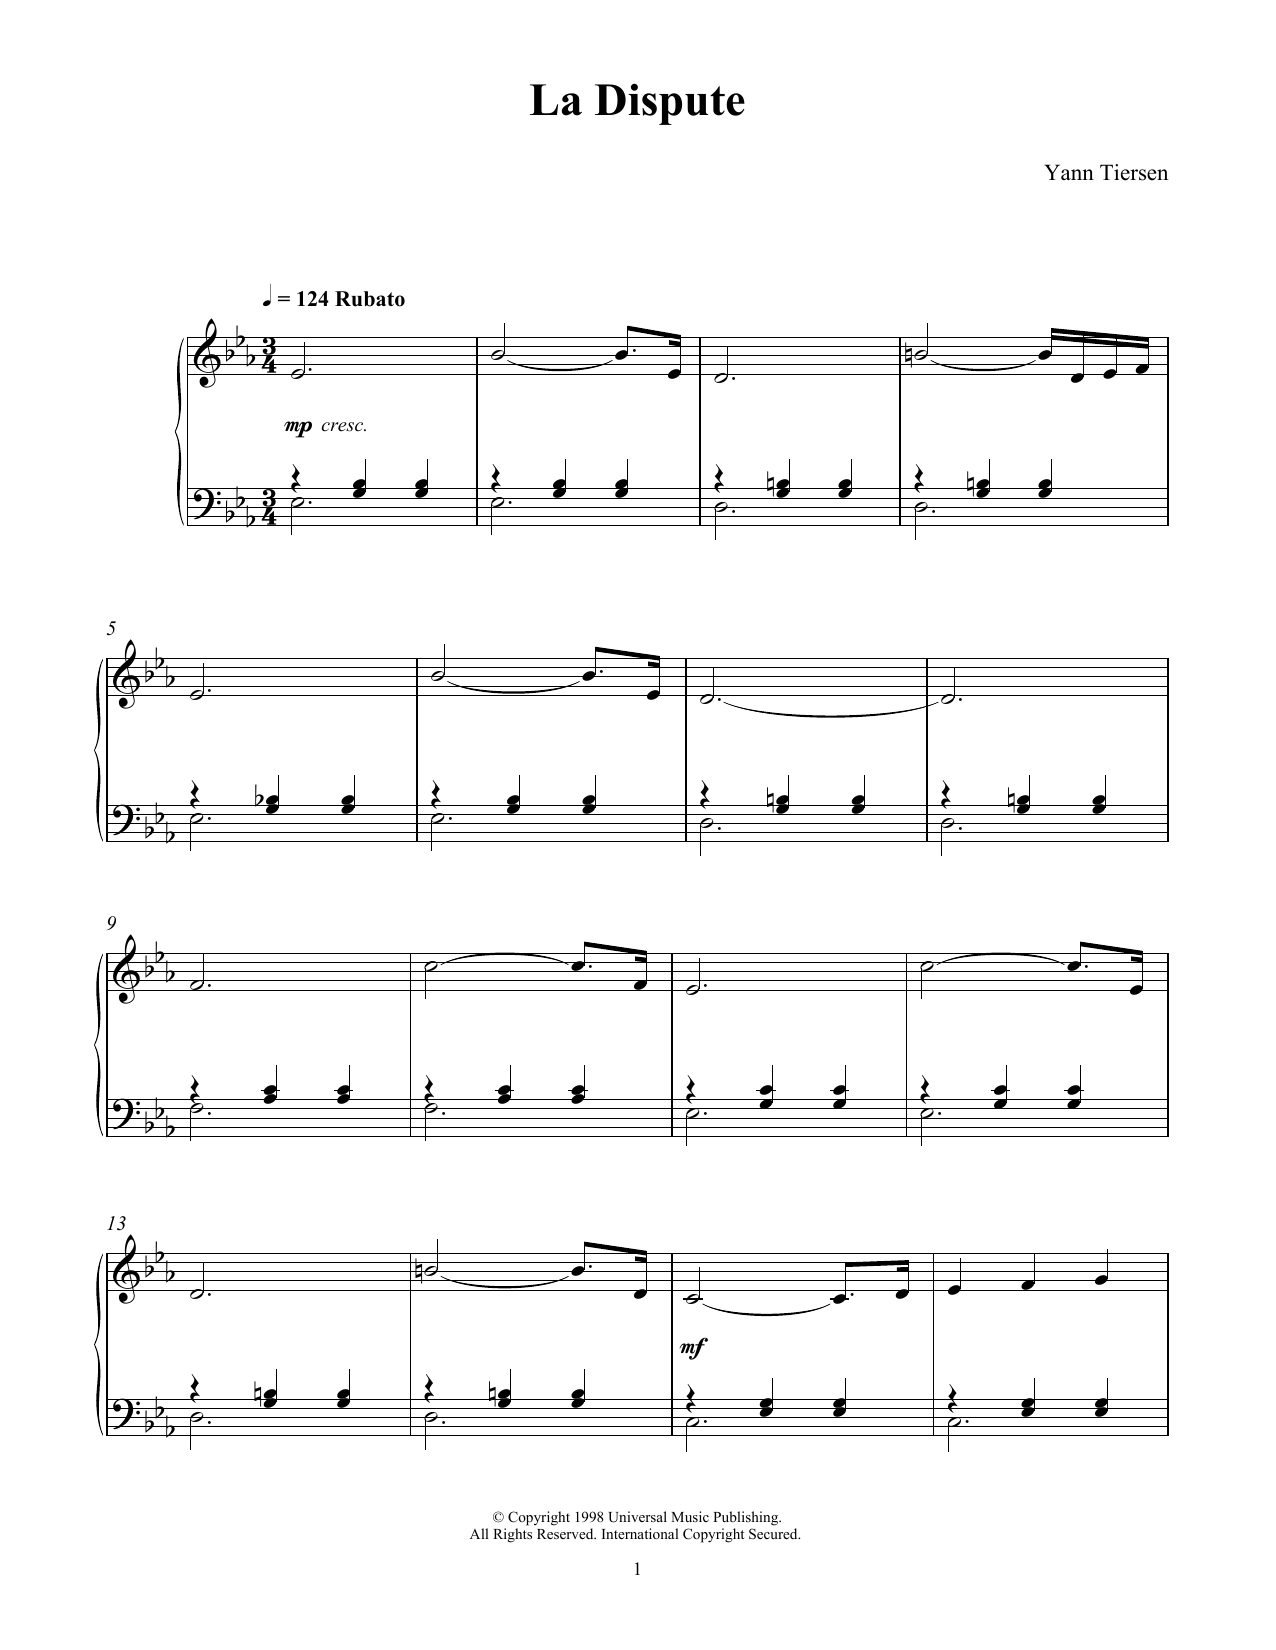 Download Yann Tiersen La Dispute Sheet Music and learn how to play Piano Solo PDF digital score in minutes